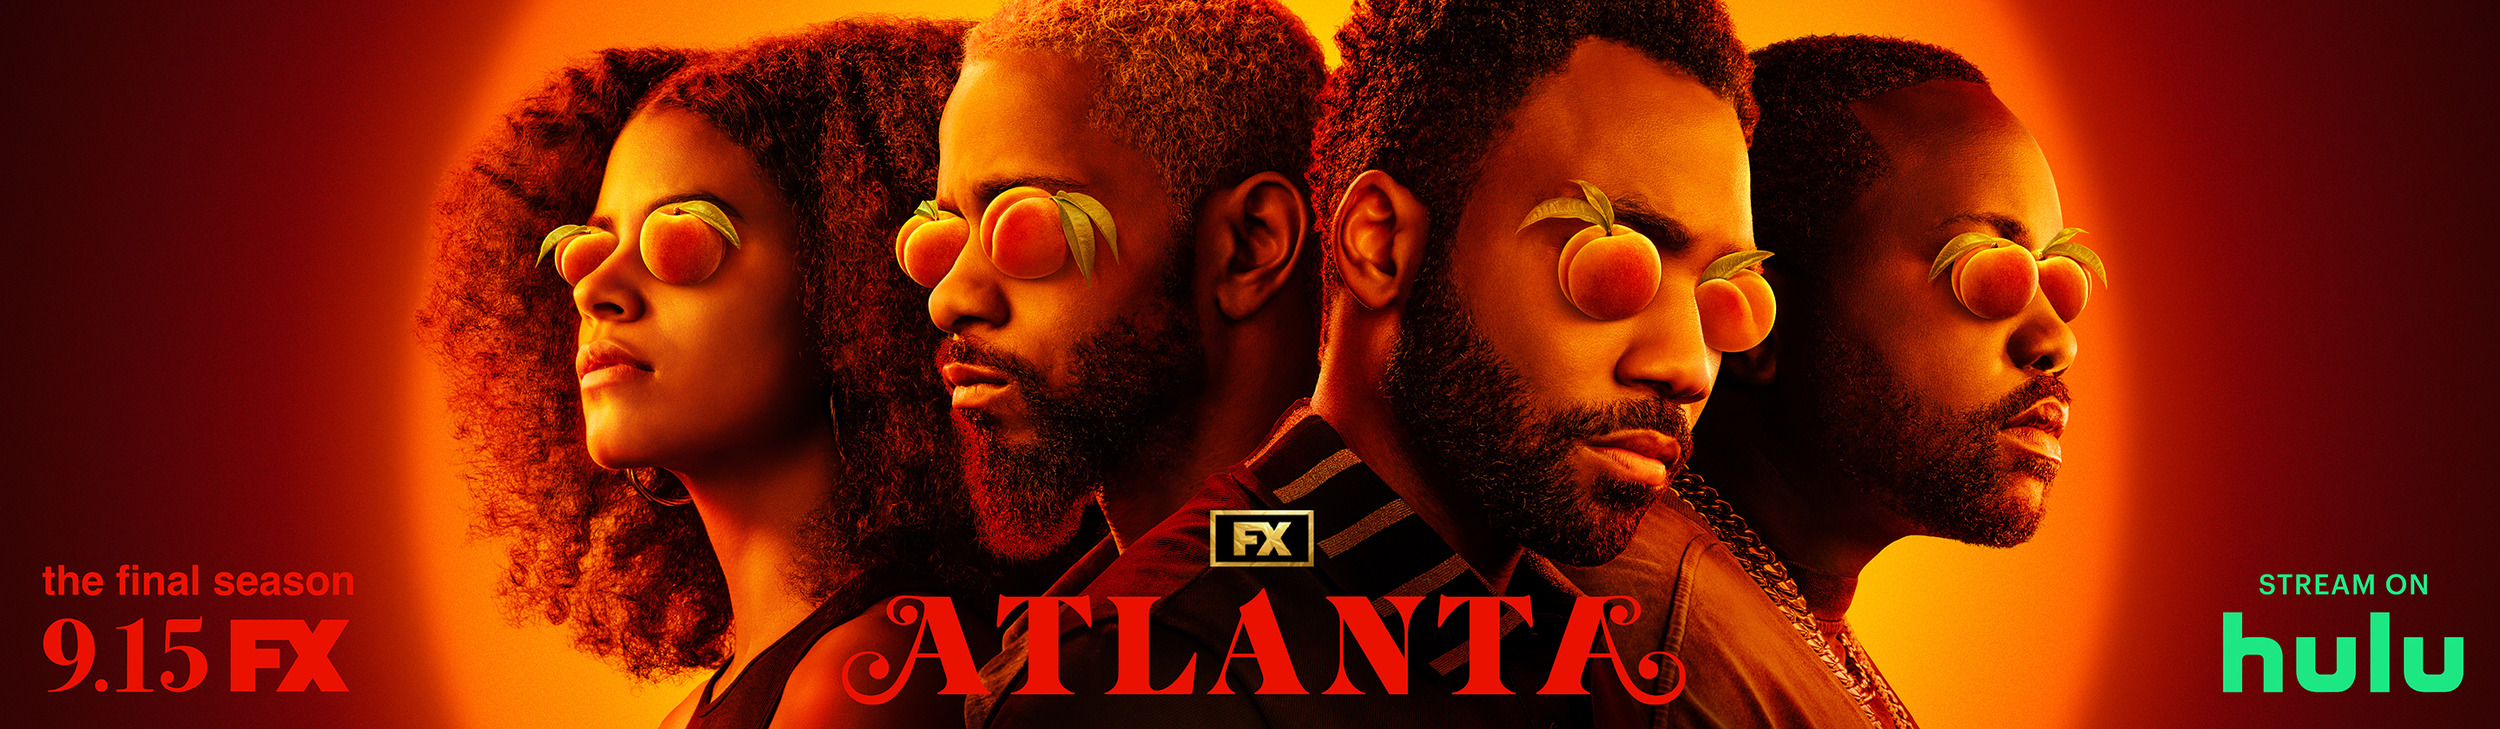 Mega Sized TV Poster Image for Atlanta (#20 of 20)